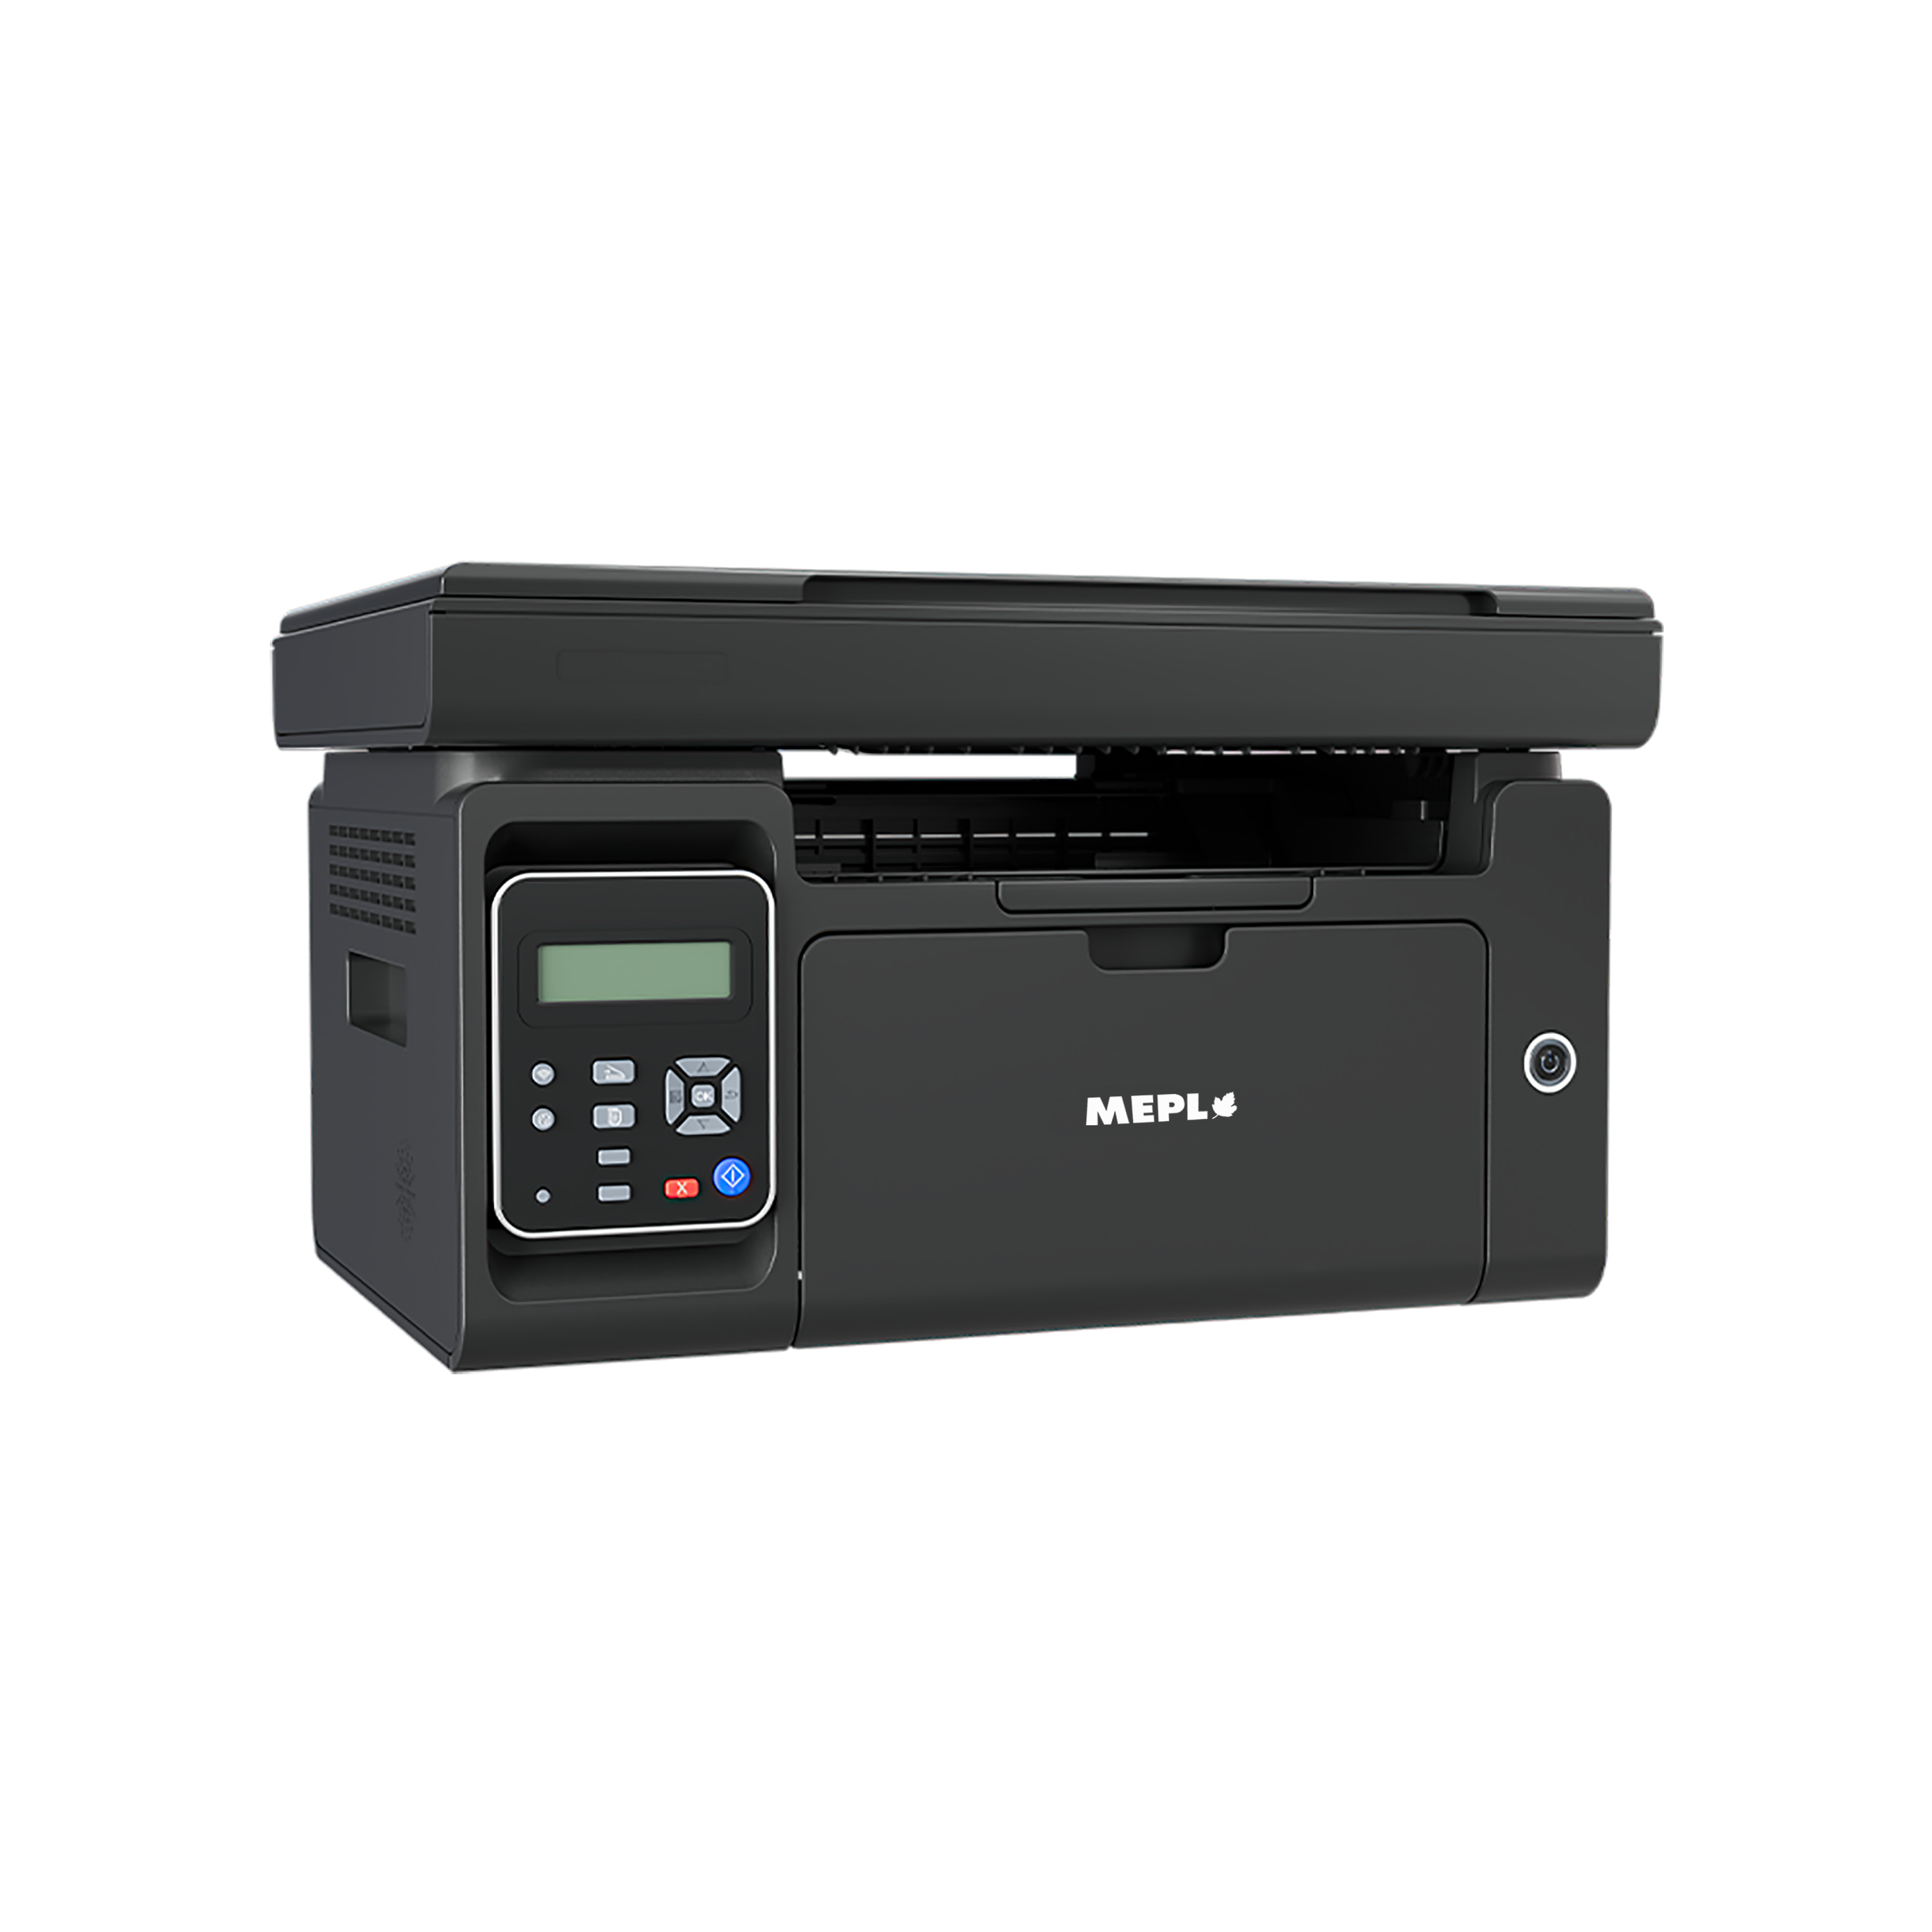 MEPL Multifunction Printer MM6503W